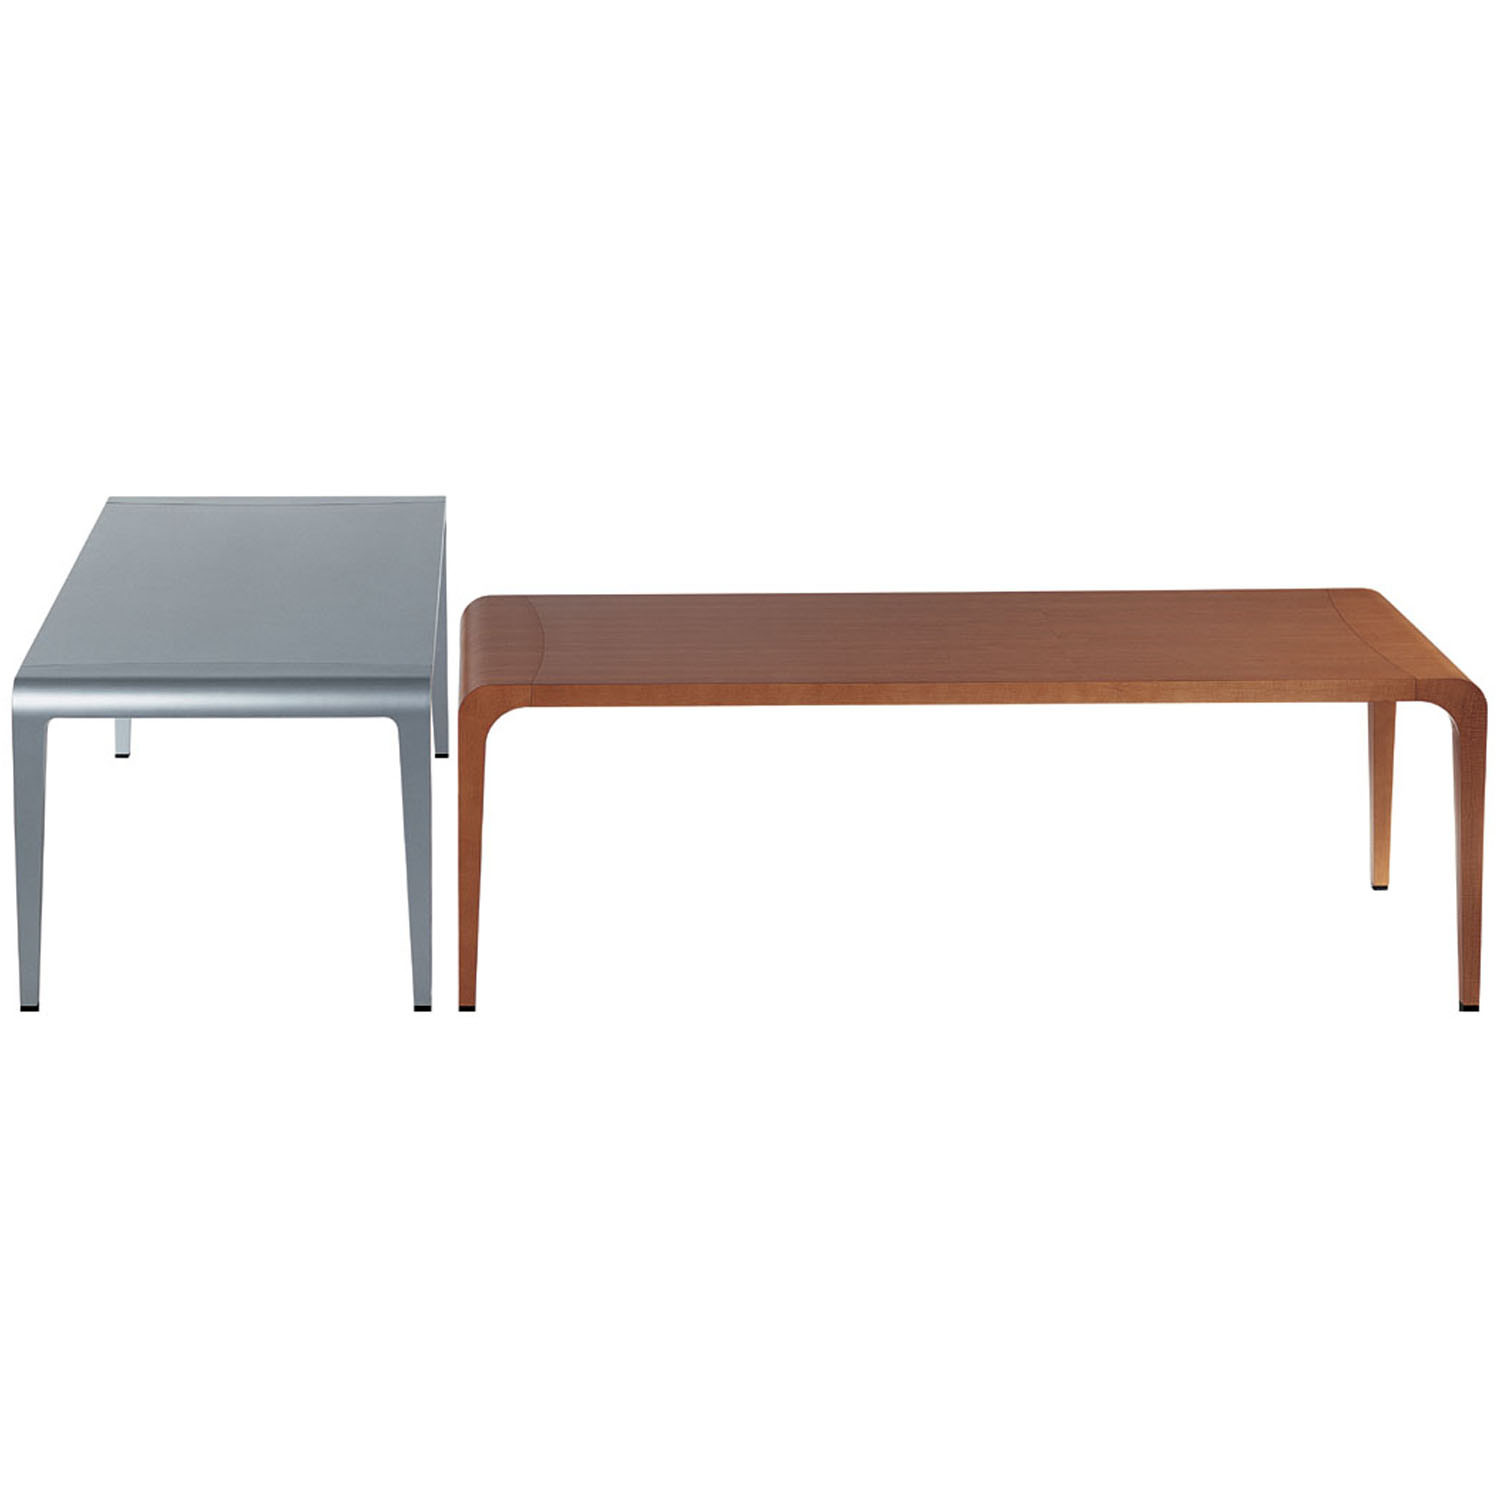 Ilvolo Tables designed by Riccardo Blumer